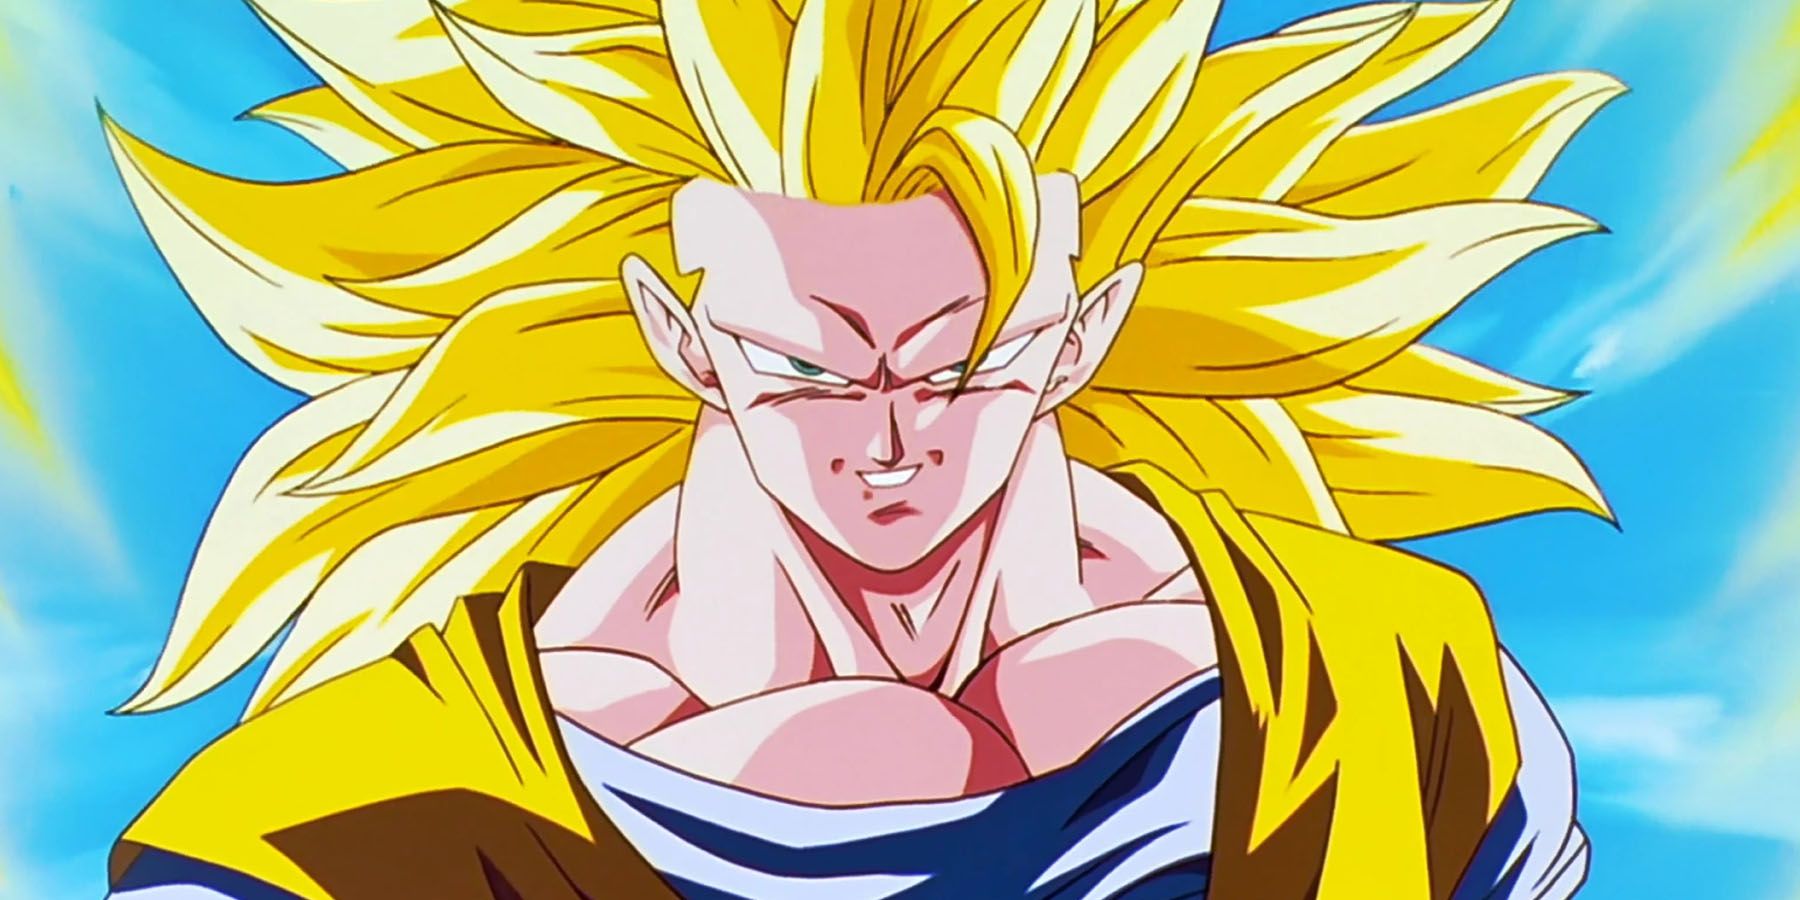 Goku using Super Saiyan 3